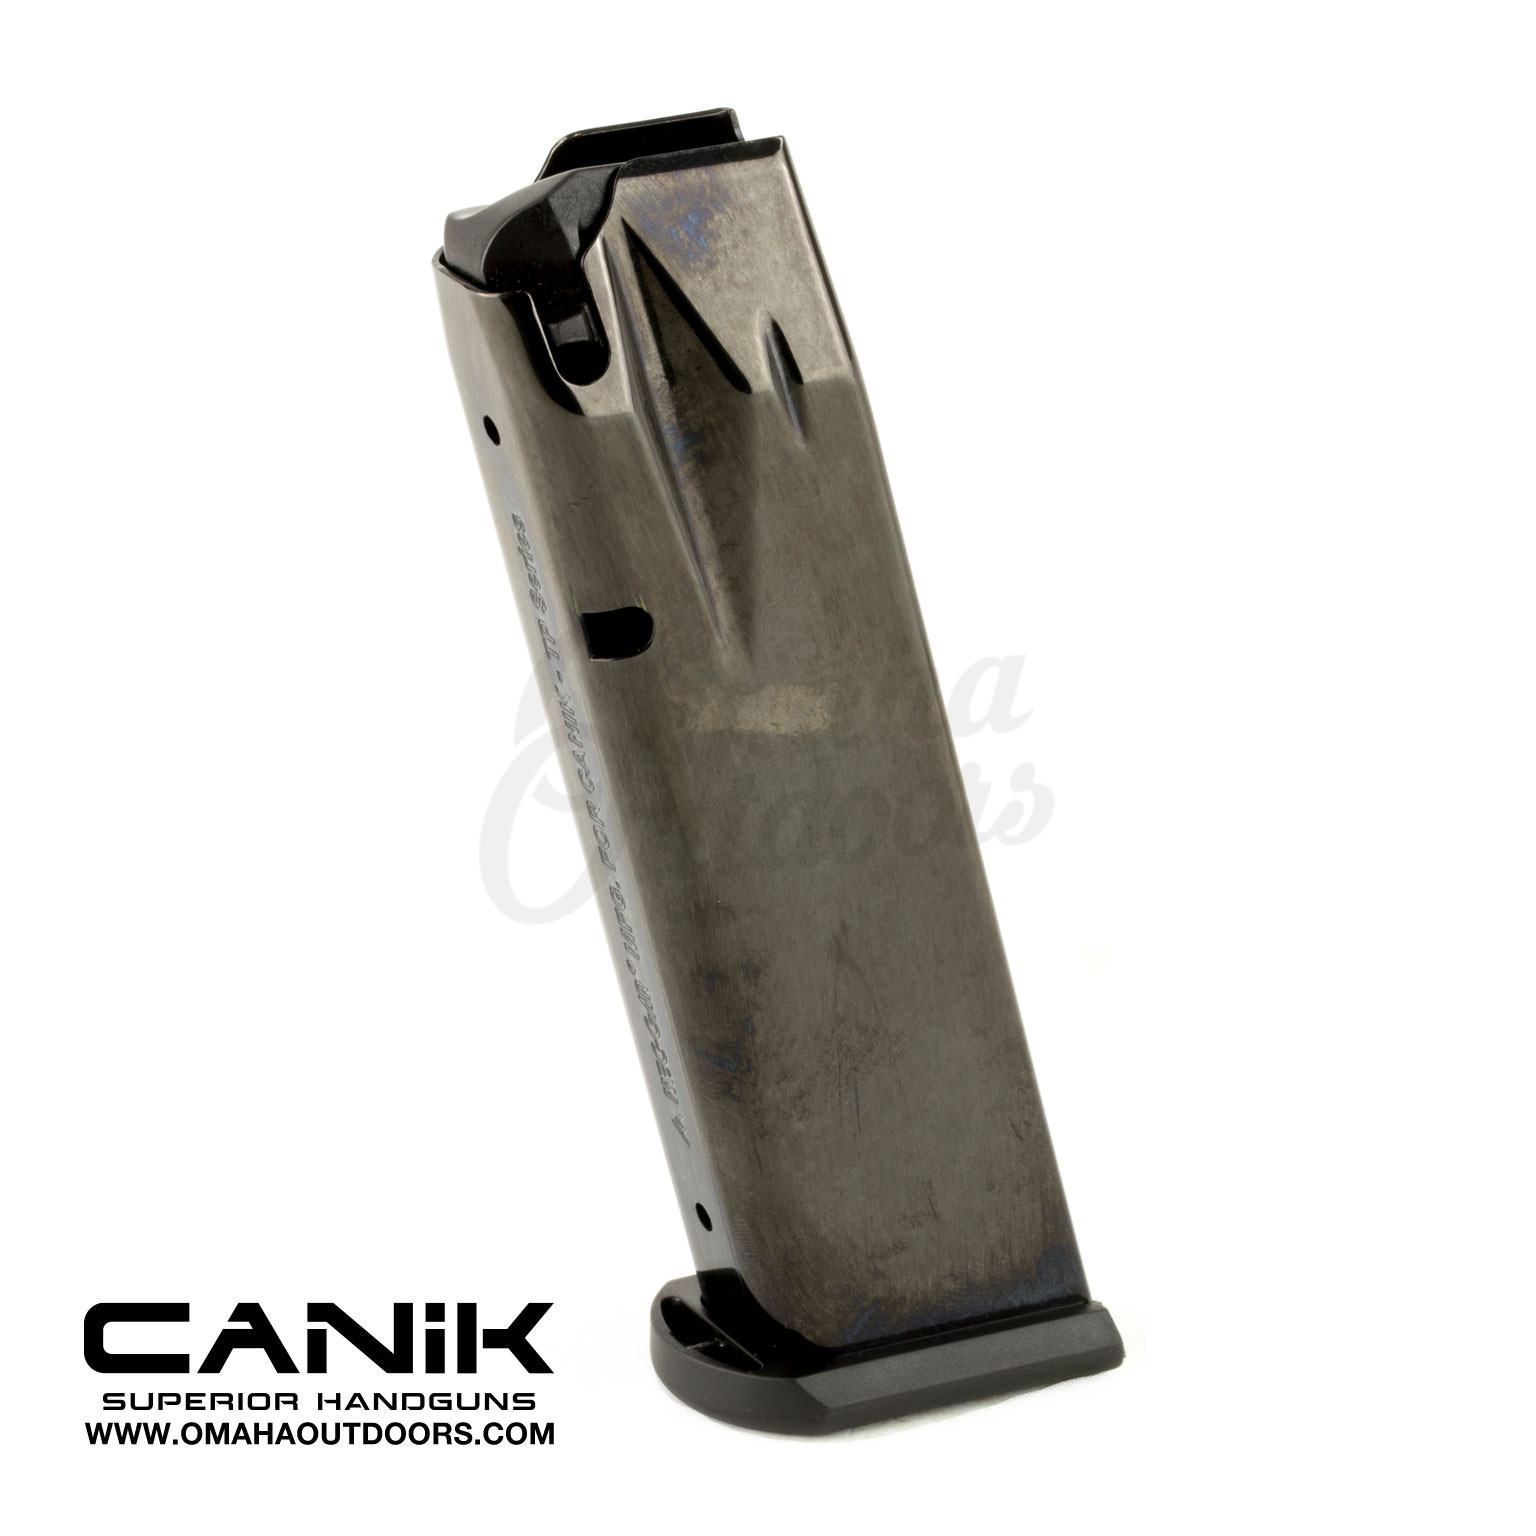 Canik sc with 18 round magazine sleeve : r/canik